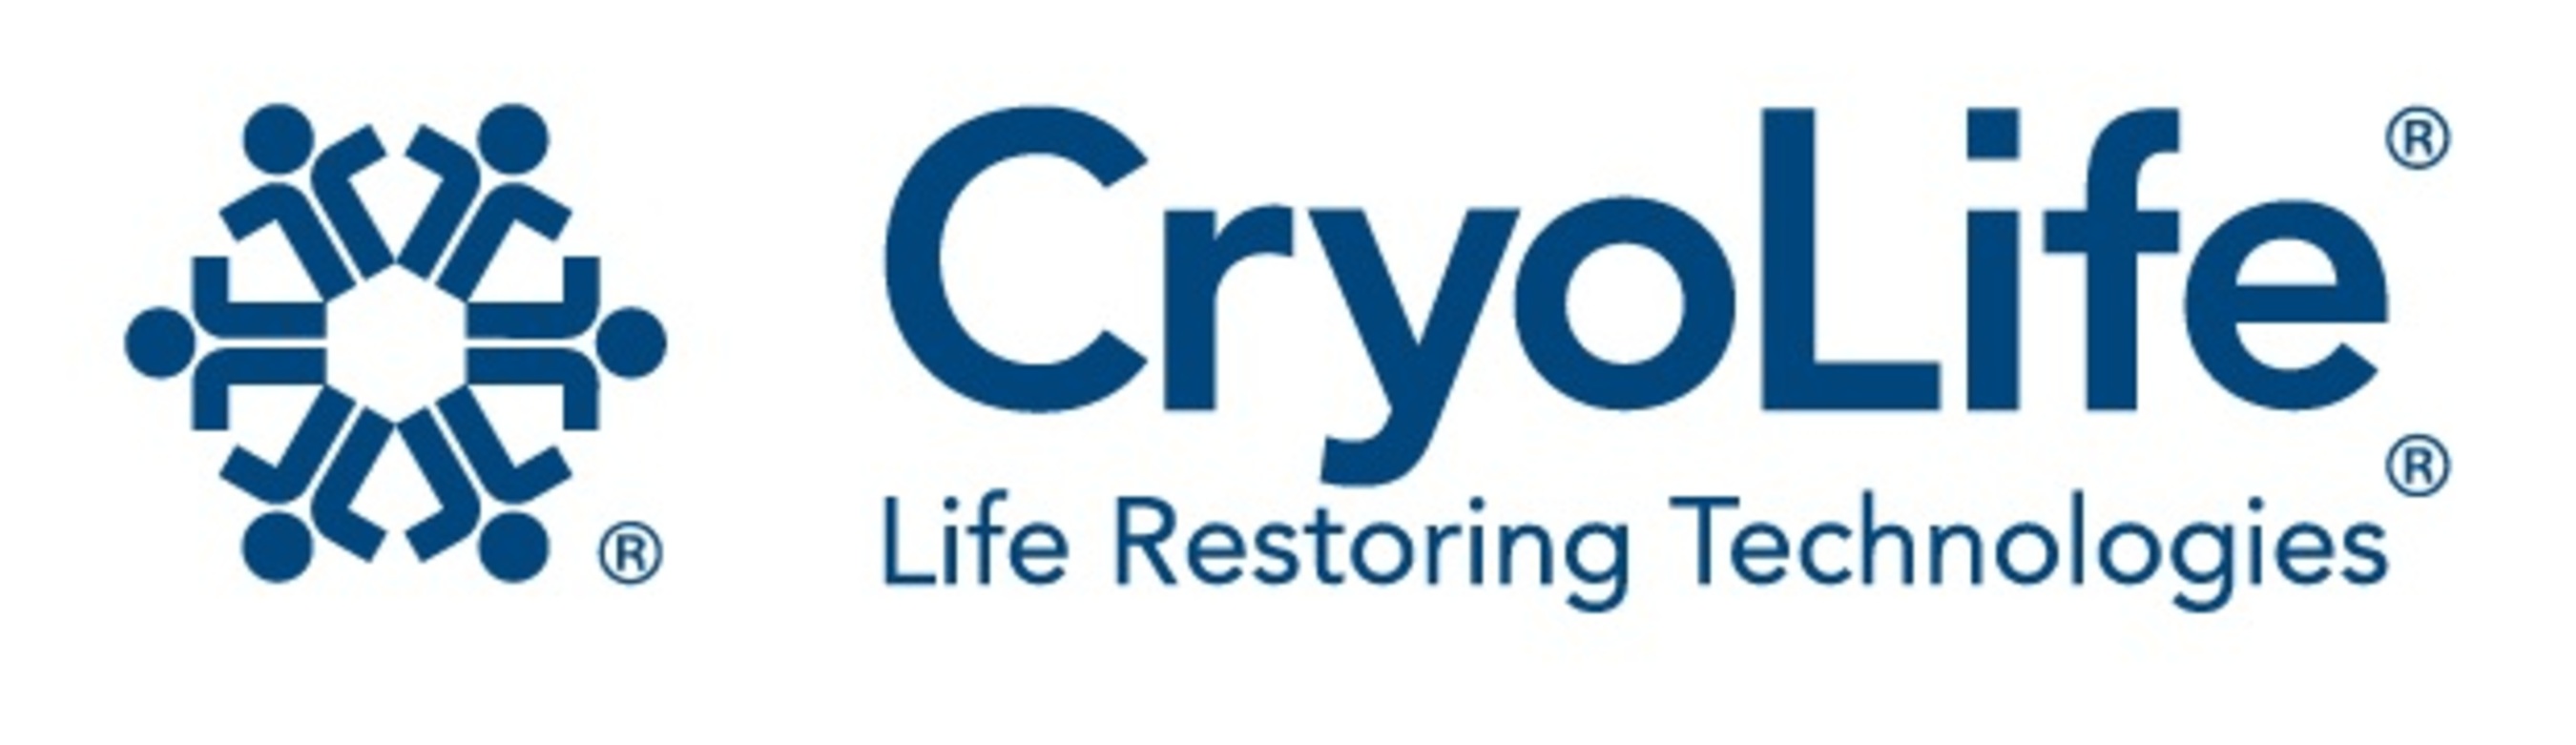 Cryolife logo. (PRNewsFoto/CryoLife, Inc.) (PRNewsFoto/CRYOLIFE_ INC_) (PRNewsFoto/CRYOLIFE, INC.) (PRNewsFoto/CRYOLIFE, INC.)